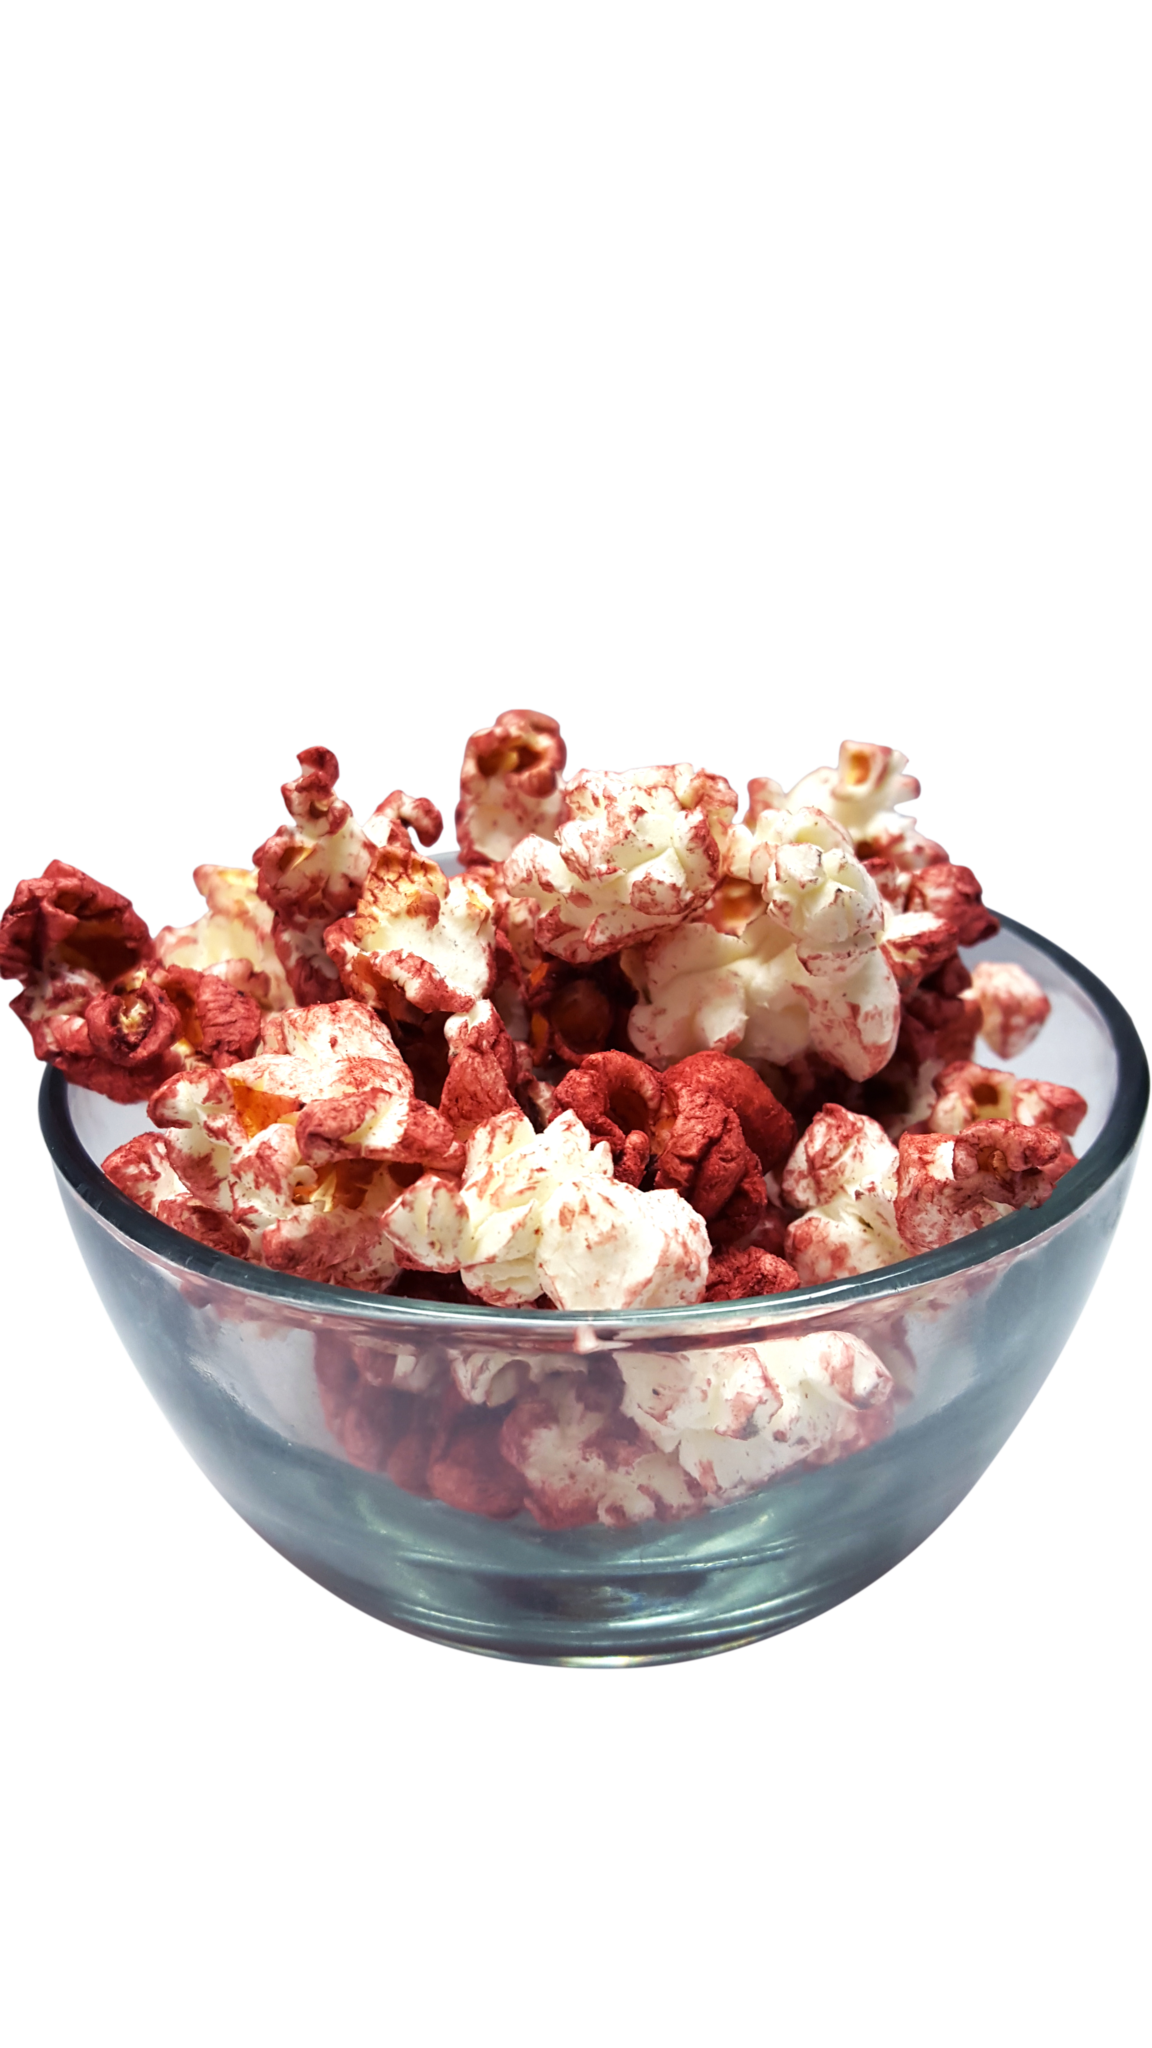 Maroon Popcorn in a bowl